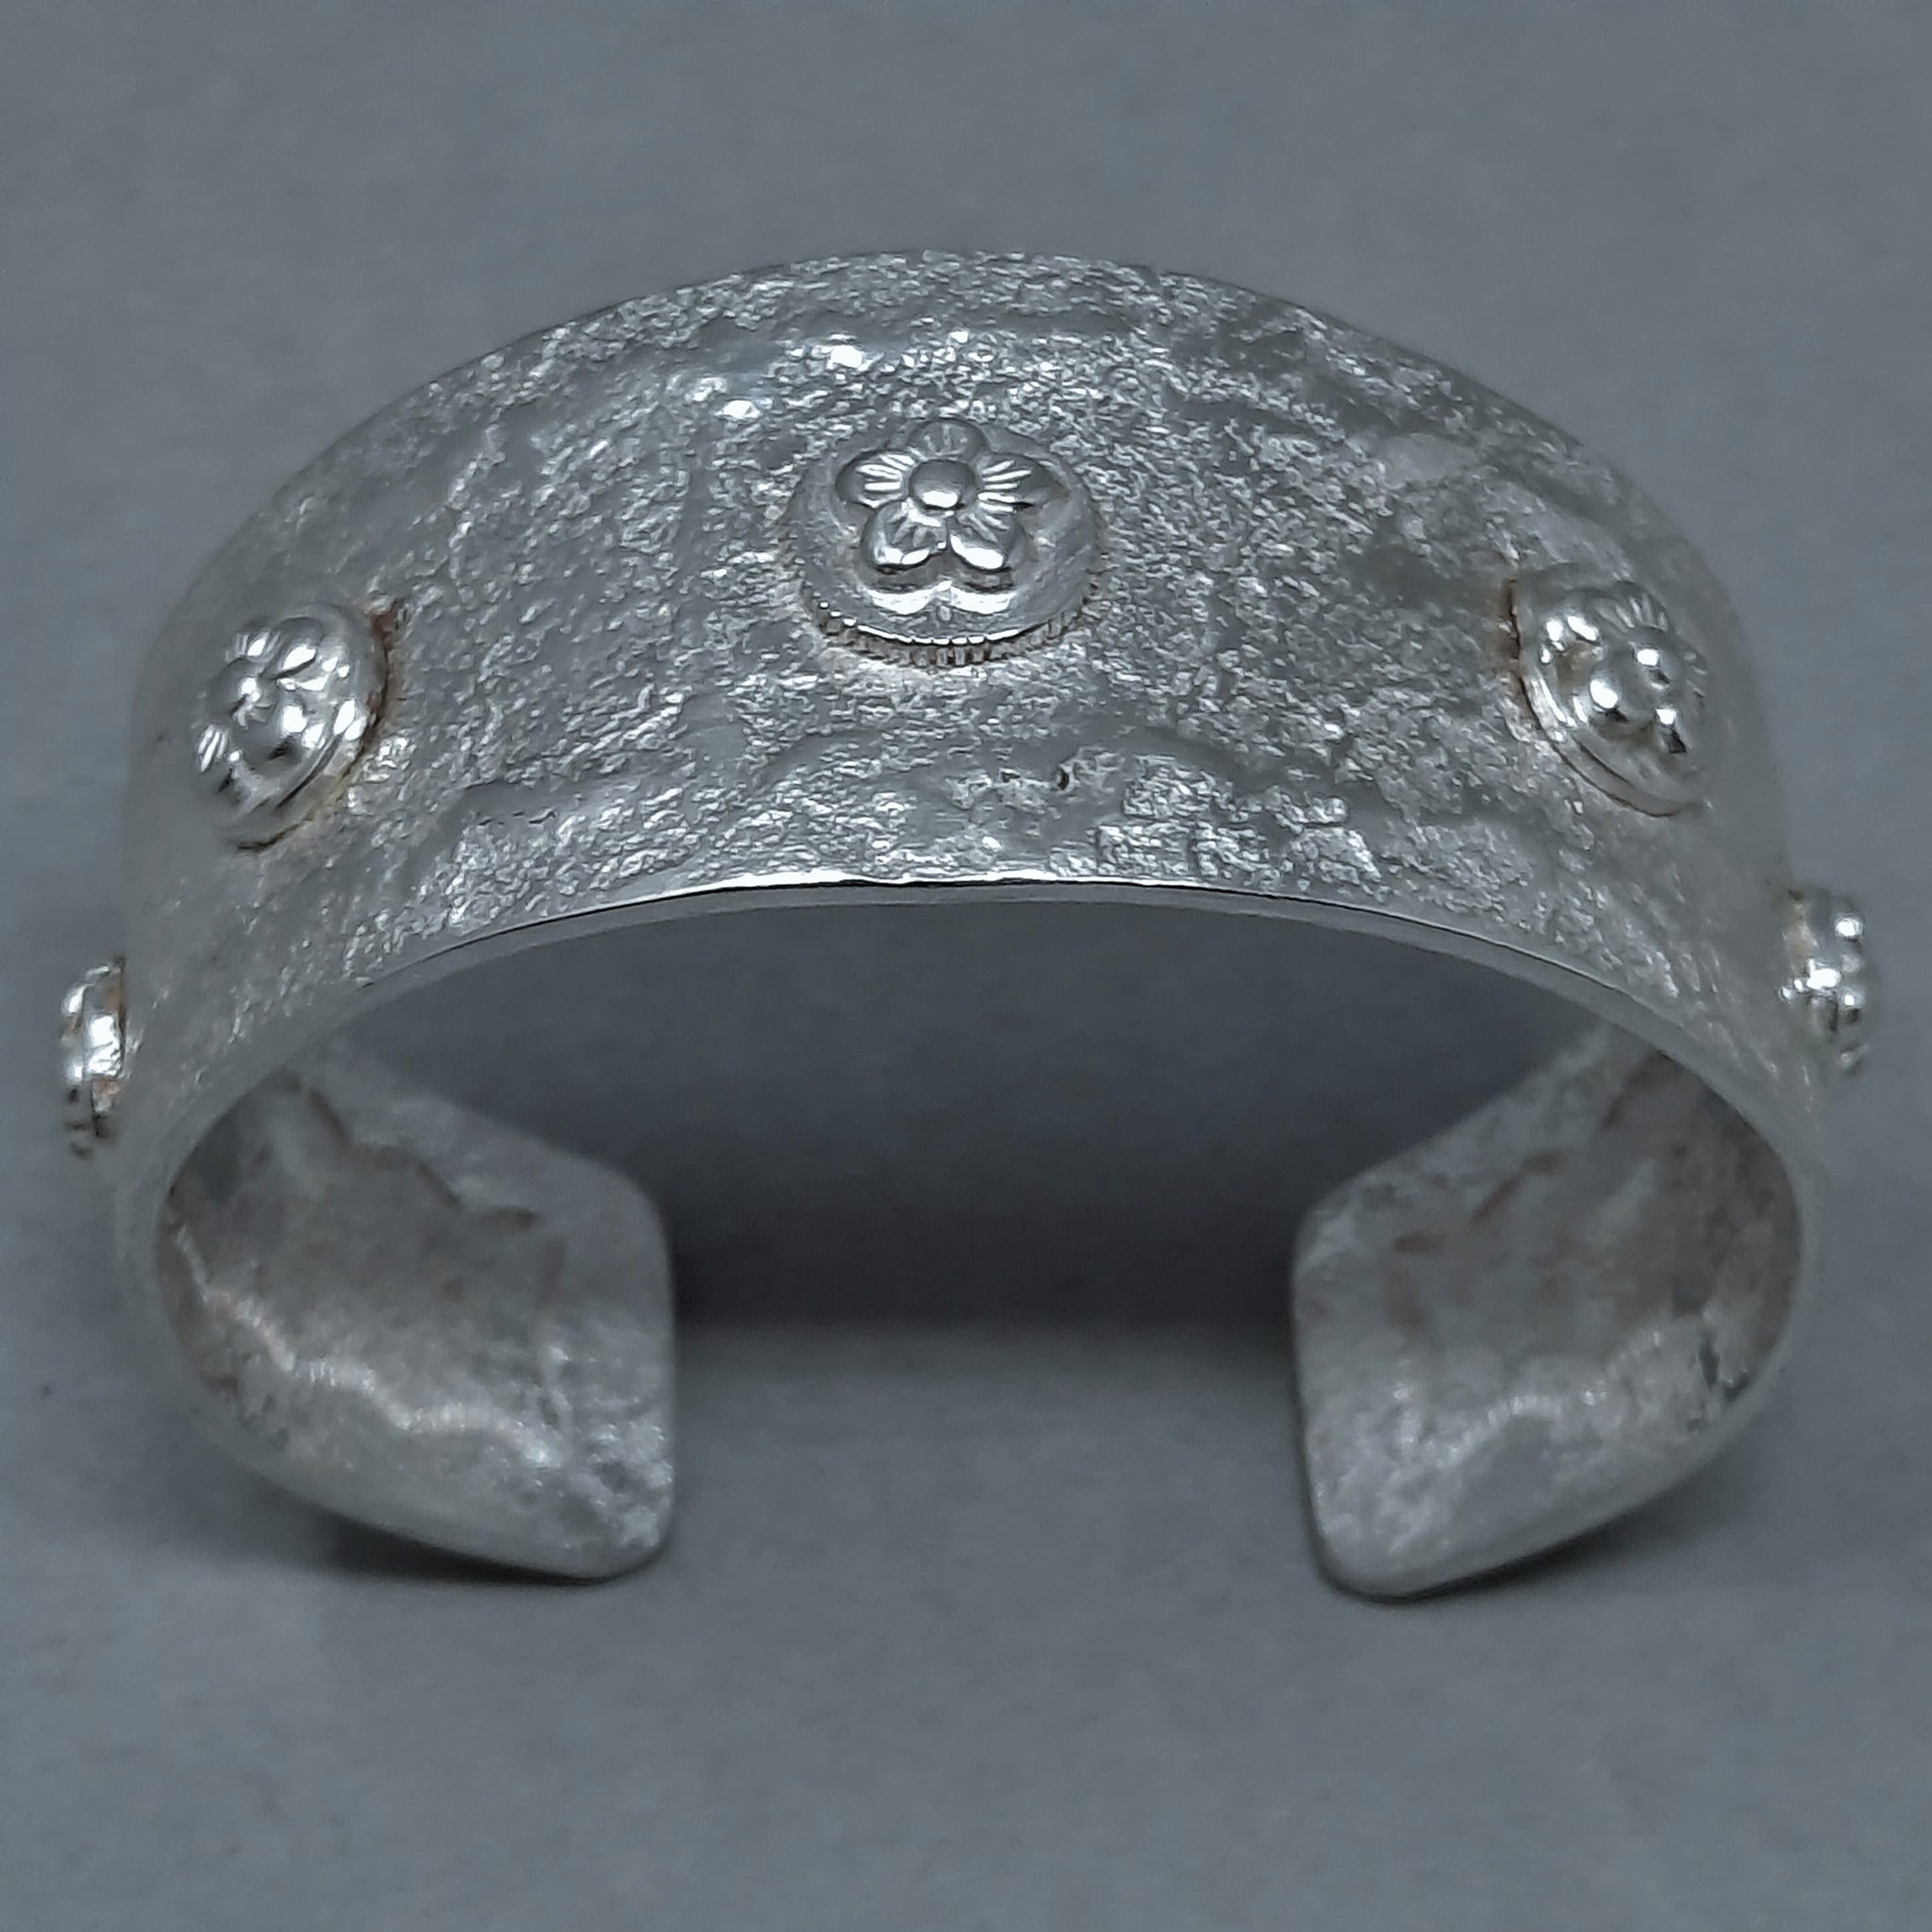 Navajo Silver Cuff Bracelet Rose Design by Gino Antonio